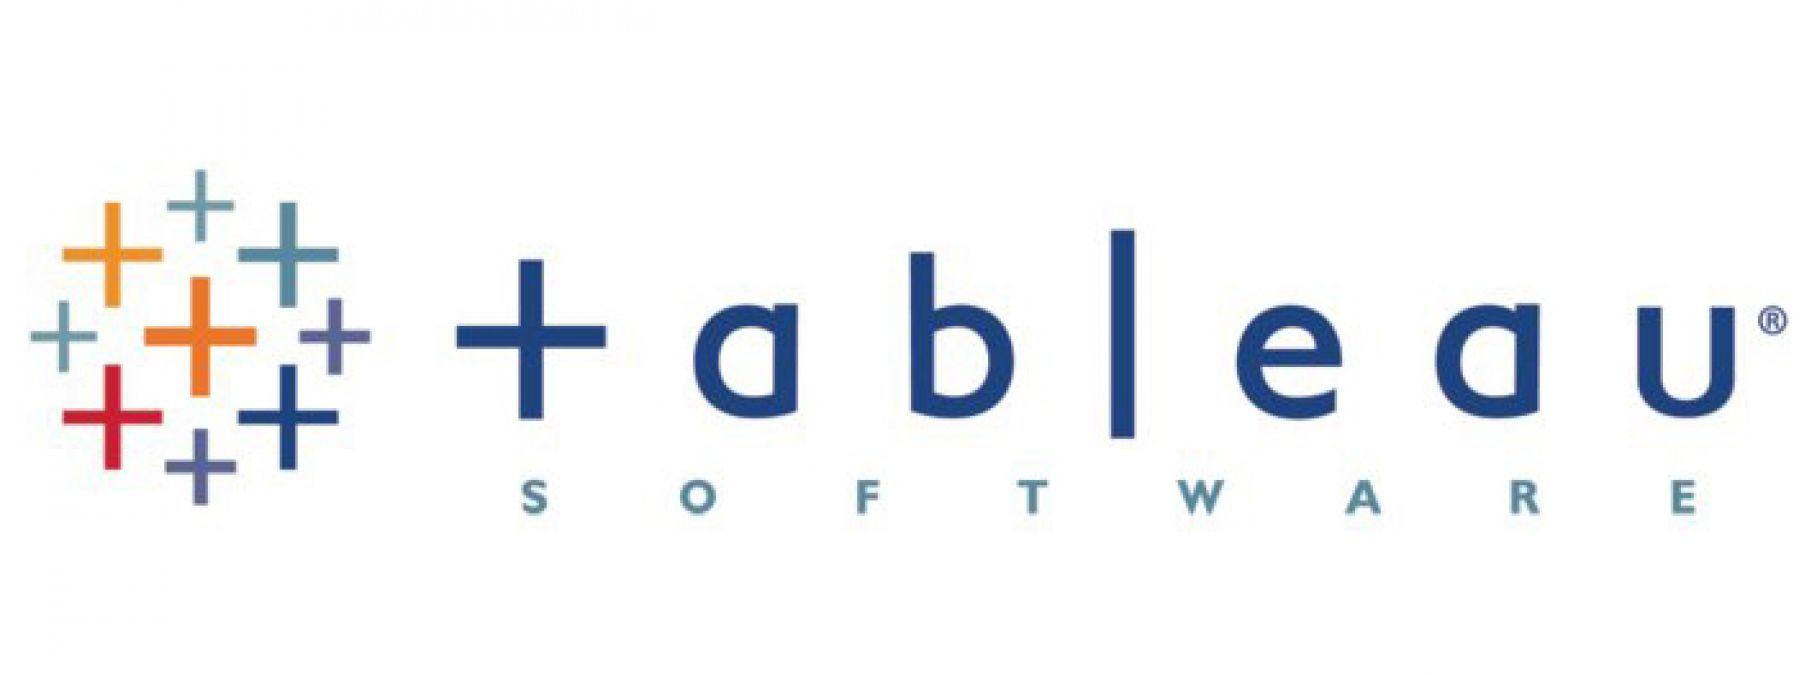 Google Software Logo - Tableau Desktop Professional Edition review - Pictures | The Tableau ...